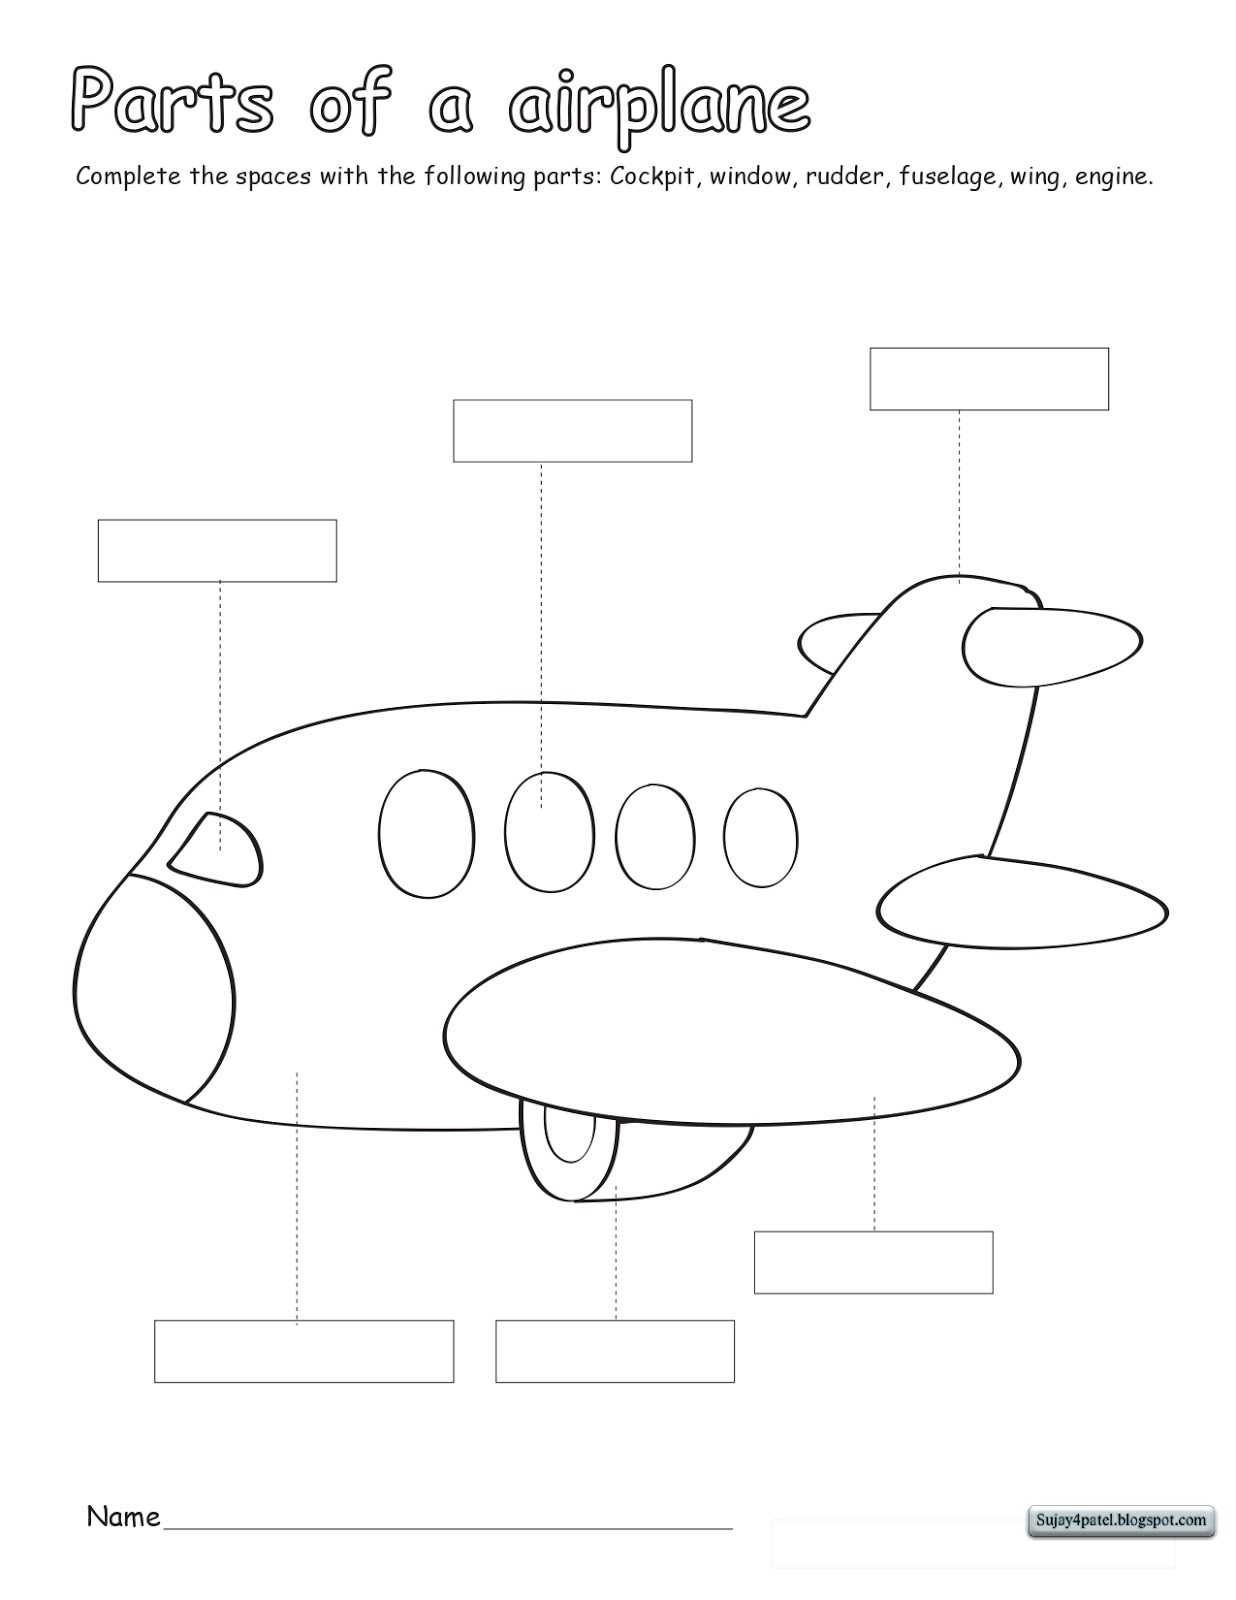 Matching plane. Plane Worksheets for Kids. Задание в форме самолета. Transport Worksheets for Kids. Plane Worksheets for Kids in.